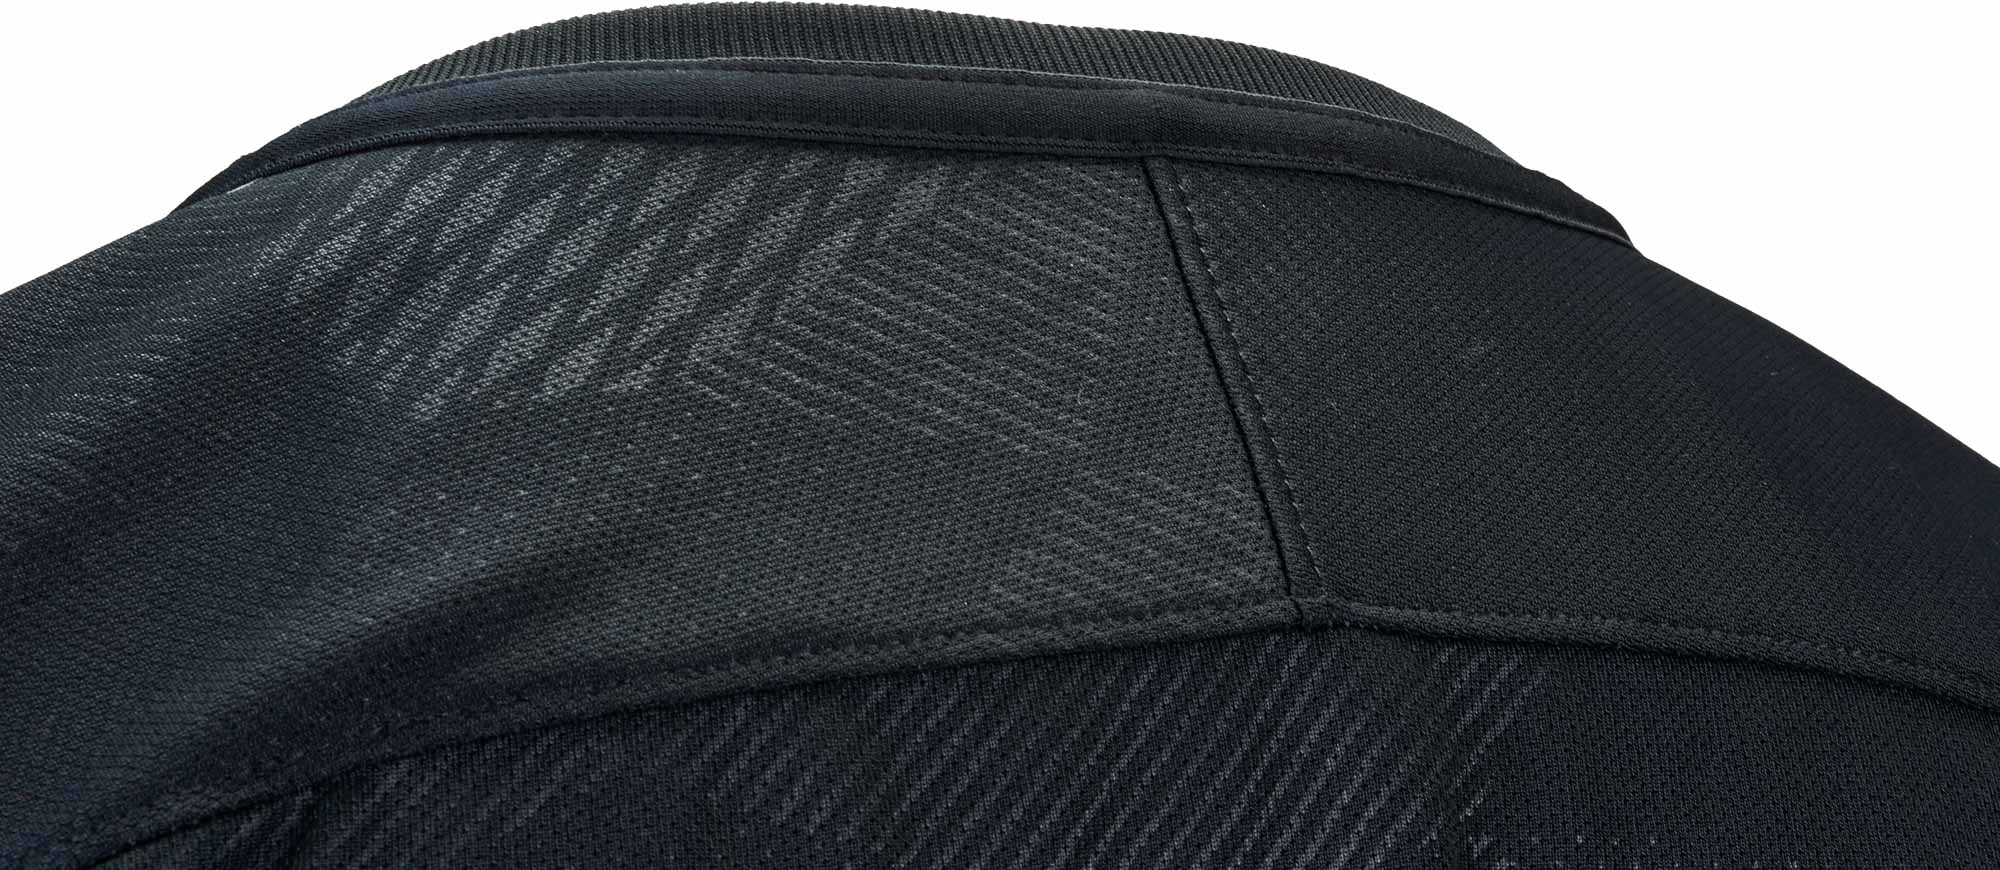 Nike launches 2017-18 PSG Third Kit